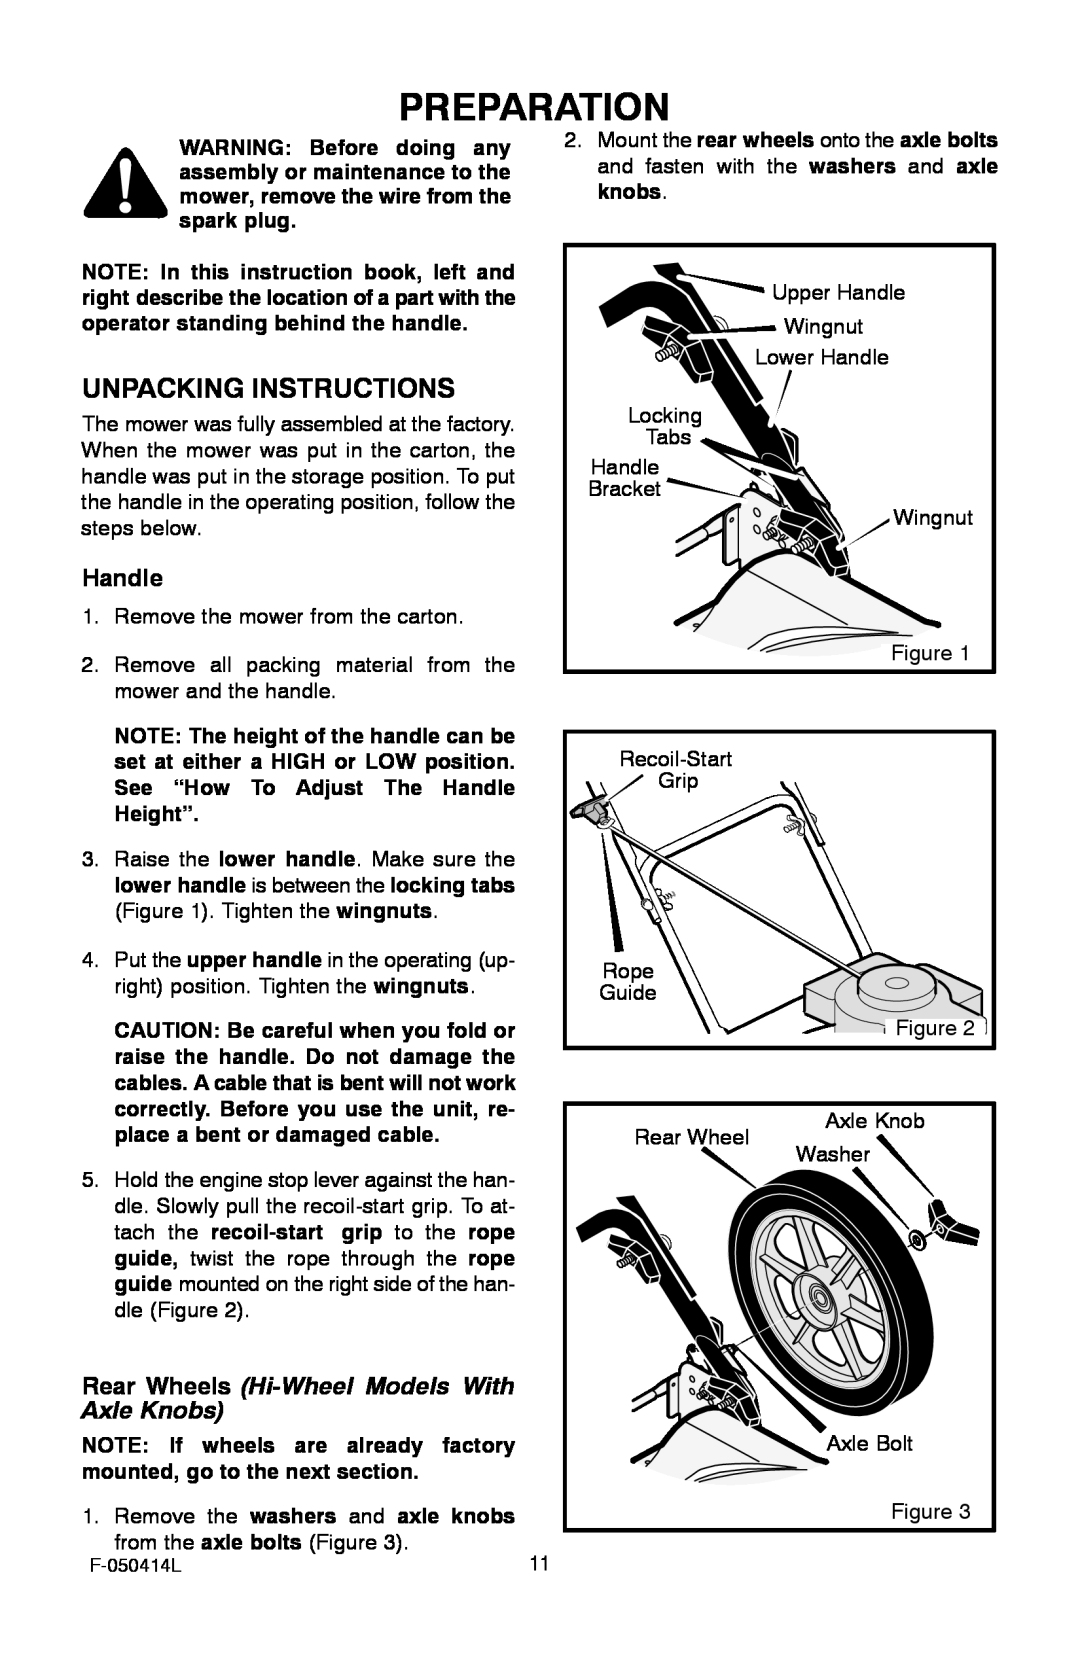 Adams 22 manual Preparation, Unpacking Instructions, Rear Wheels Hi-WheelModels With Axle Knobs 